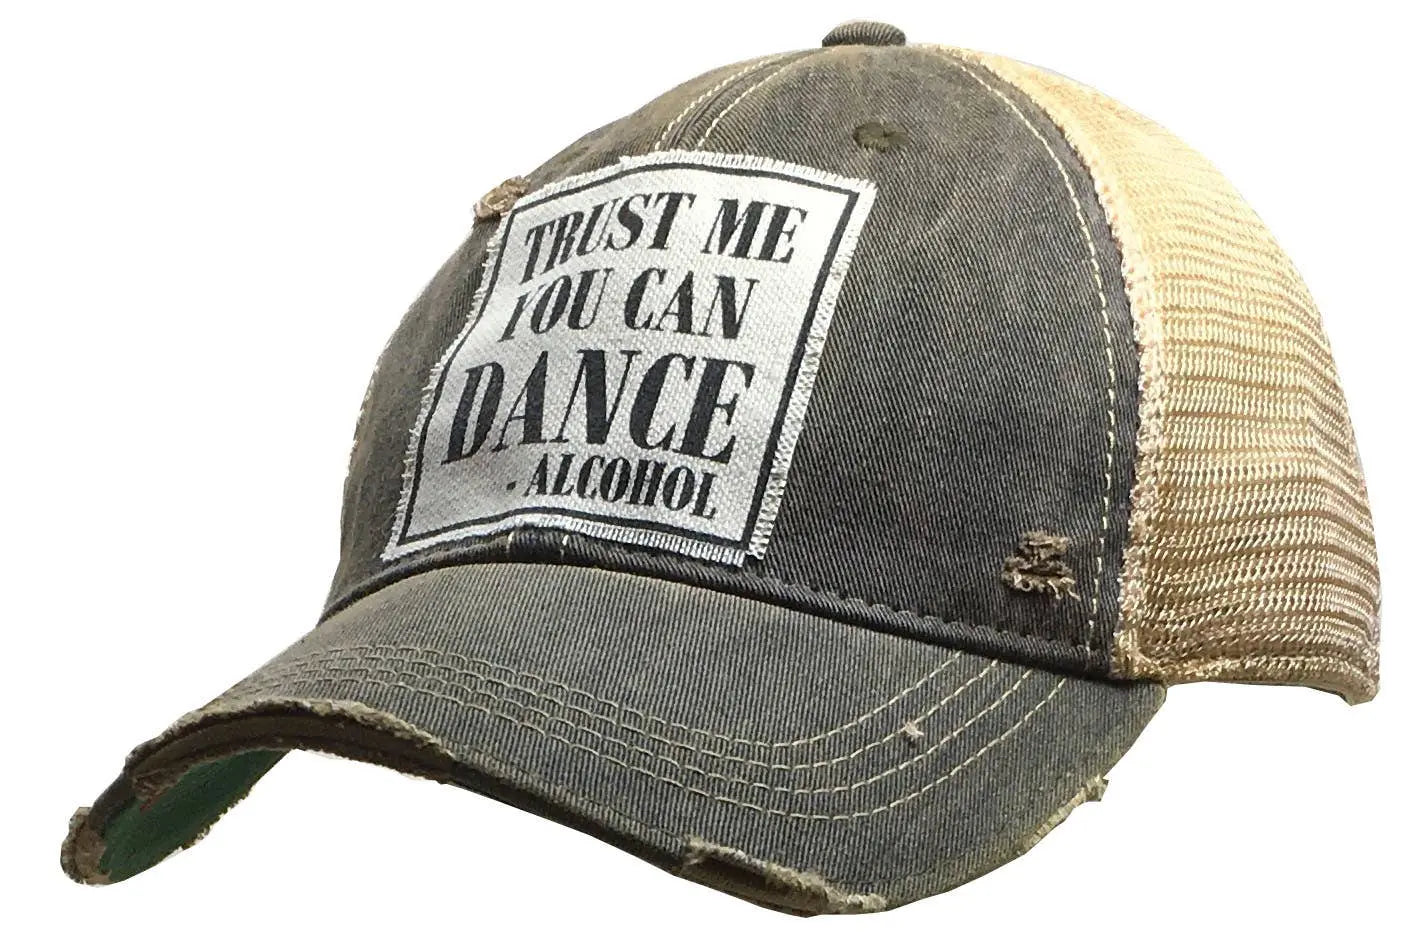 Trust Me You Can Dance--Alcohol Trucker Hat Baseball Cap - Bay-Tique